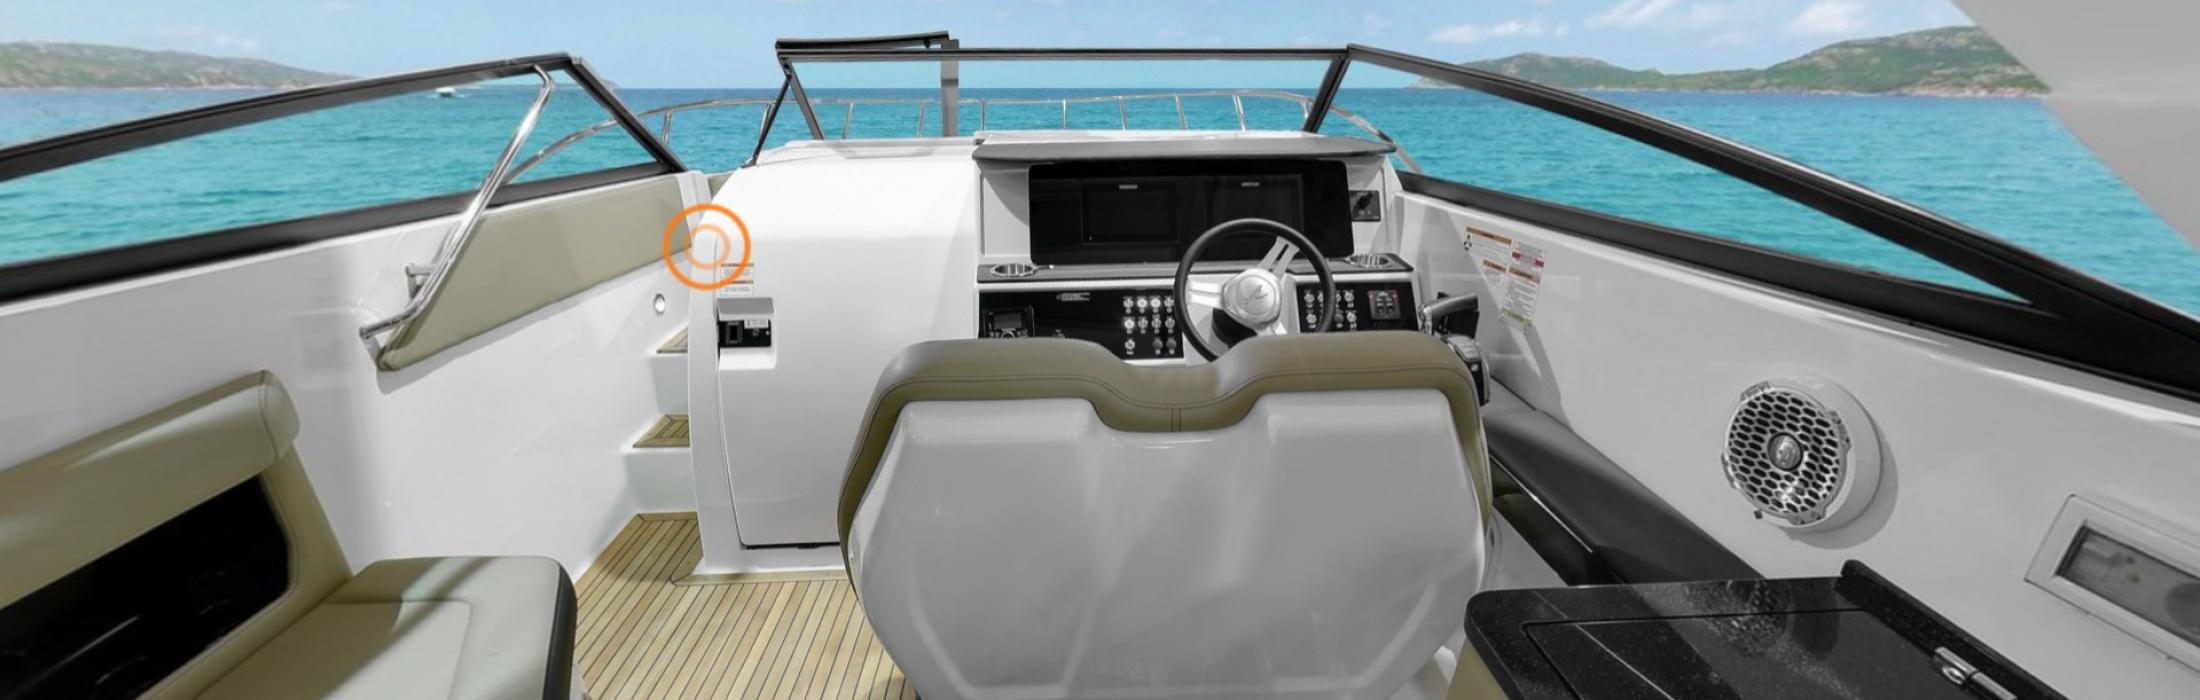 Sea Ray Virtual tours : Searay 250 SDX OB & Searay 290 Sundancer